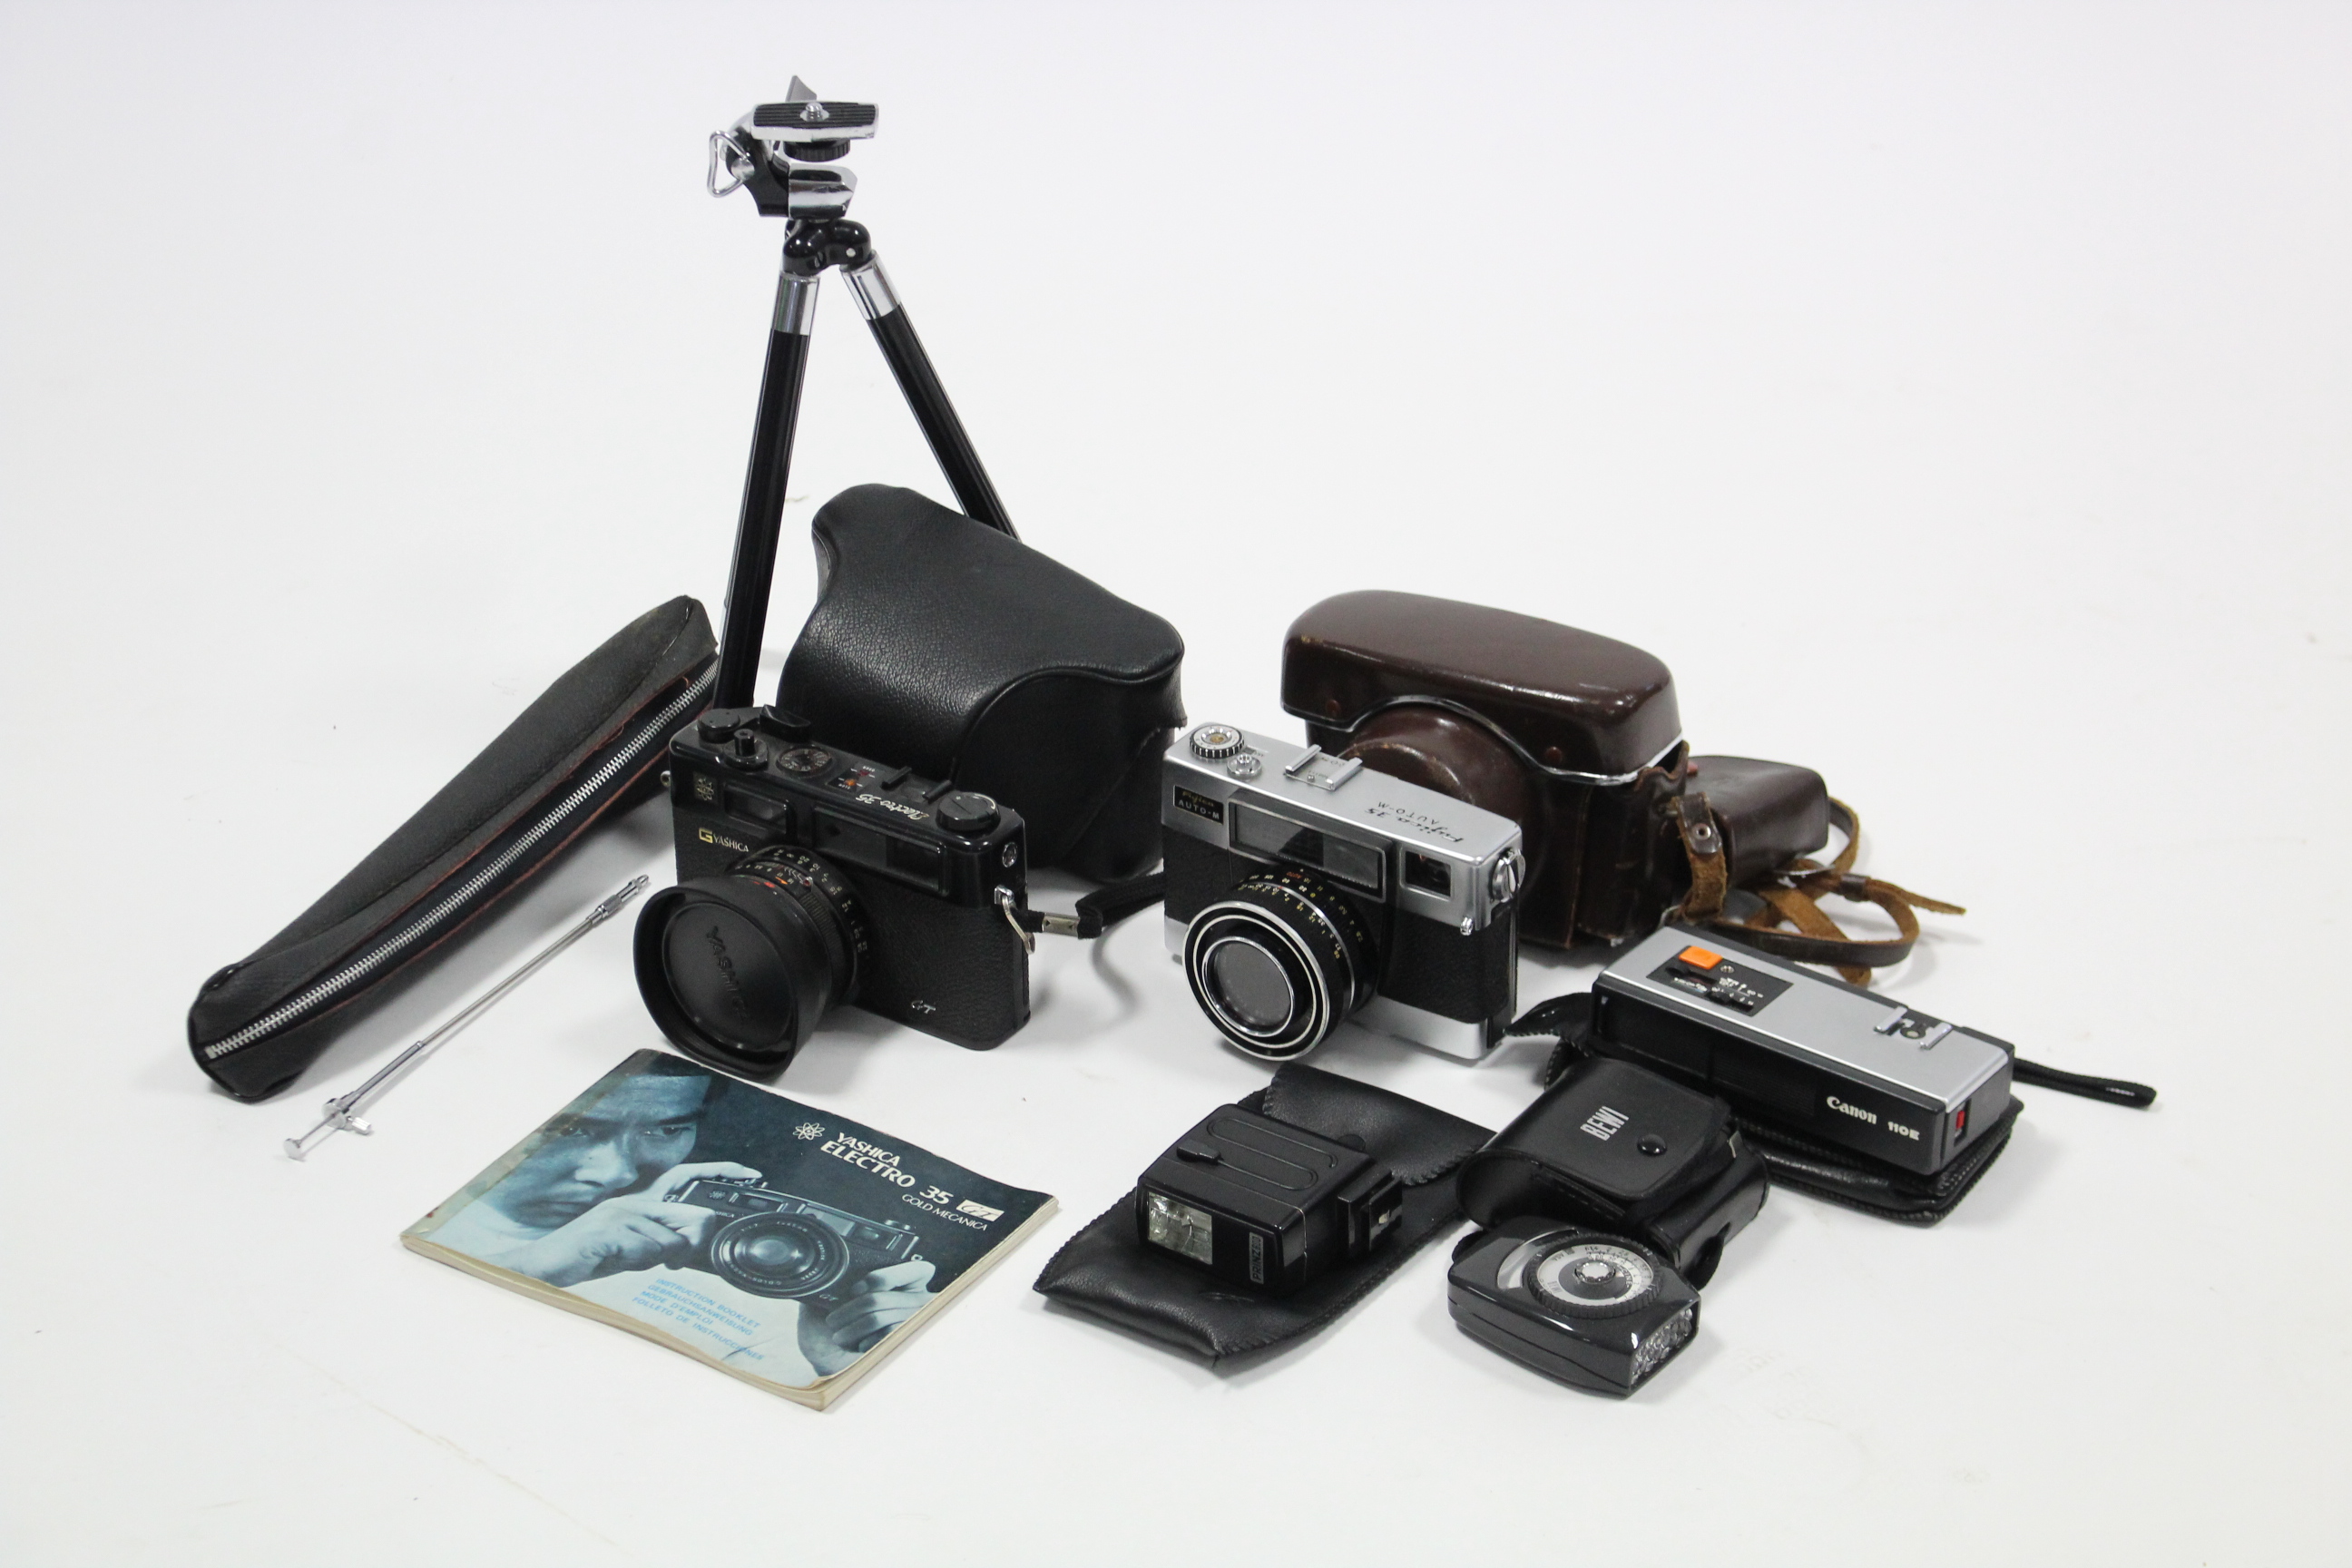 A Yashica “Electro 35” camera; a Fujica 35 camera; a Canon “11OE” camera; & various camera